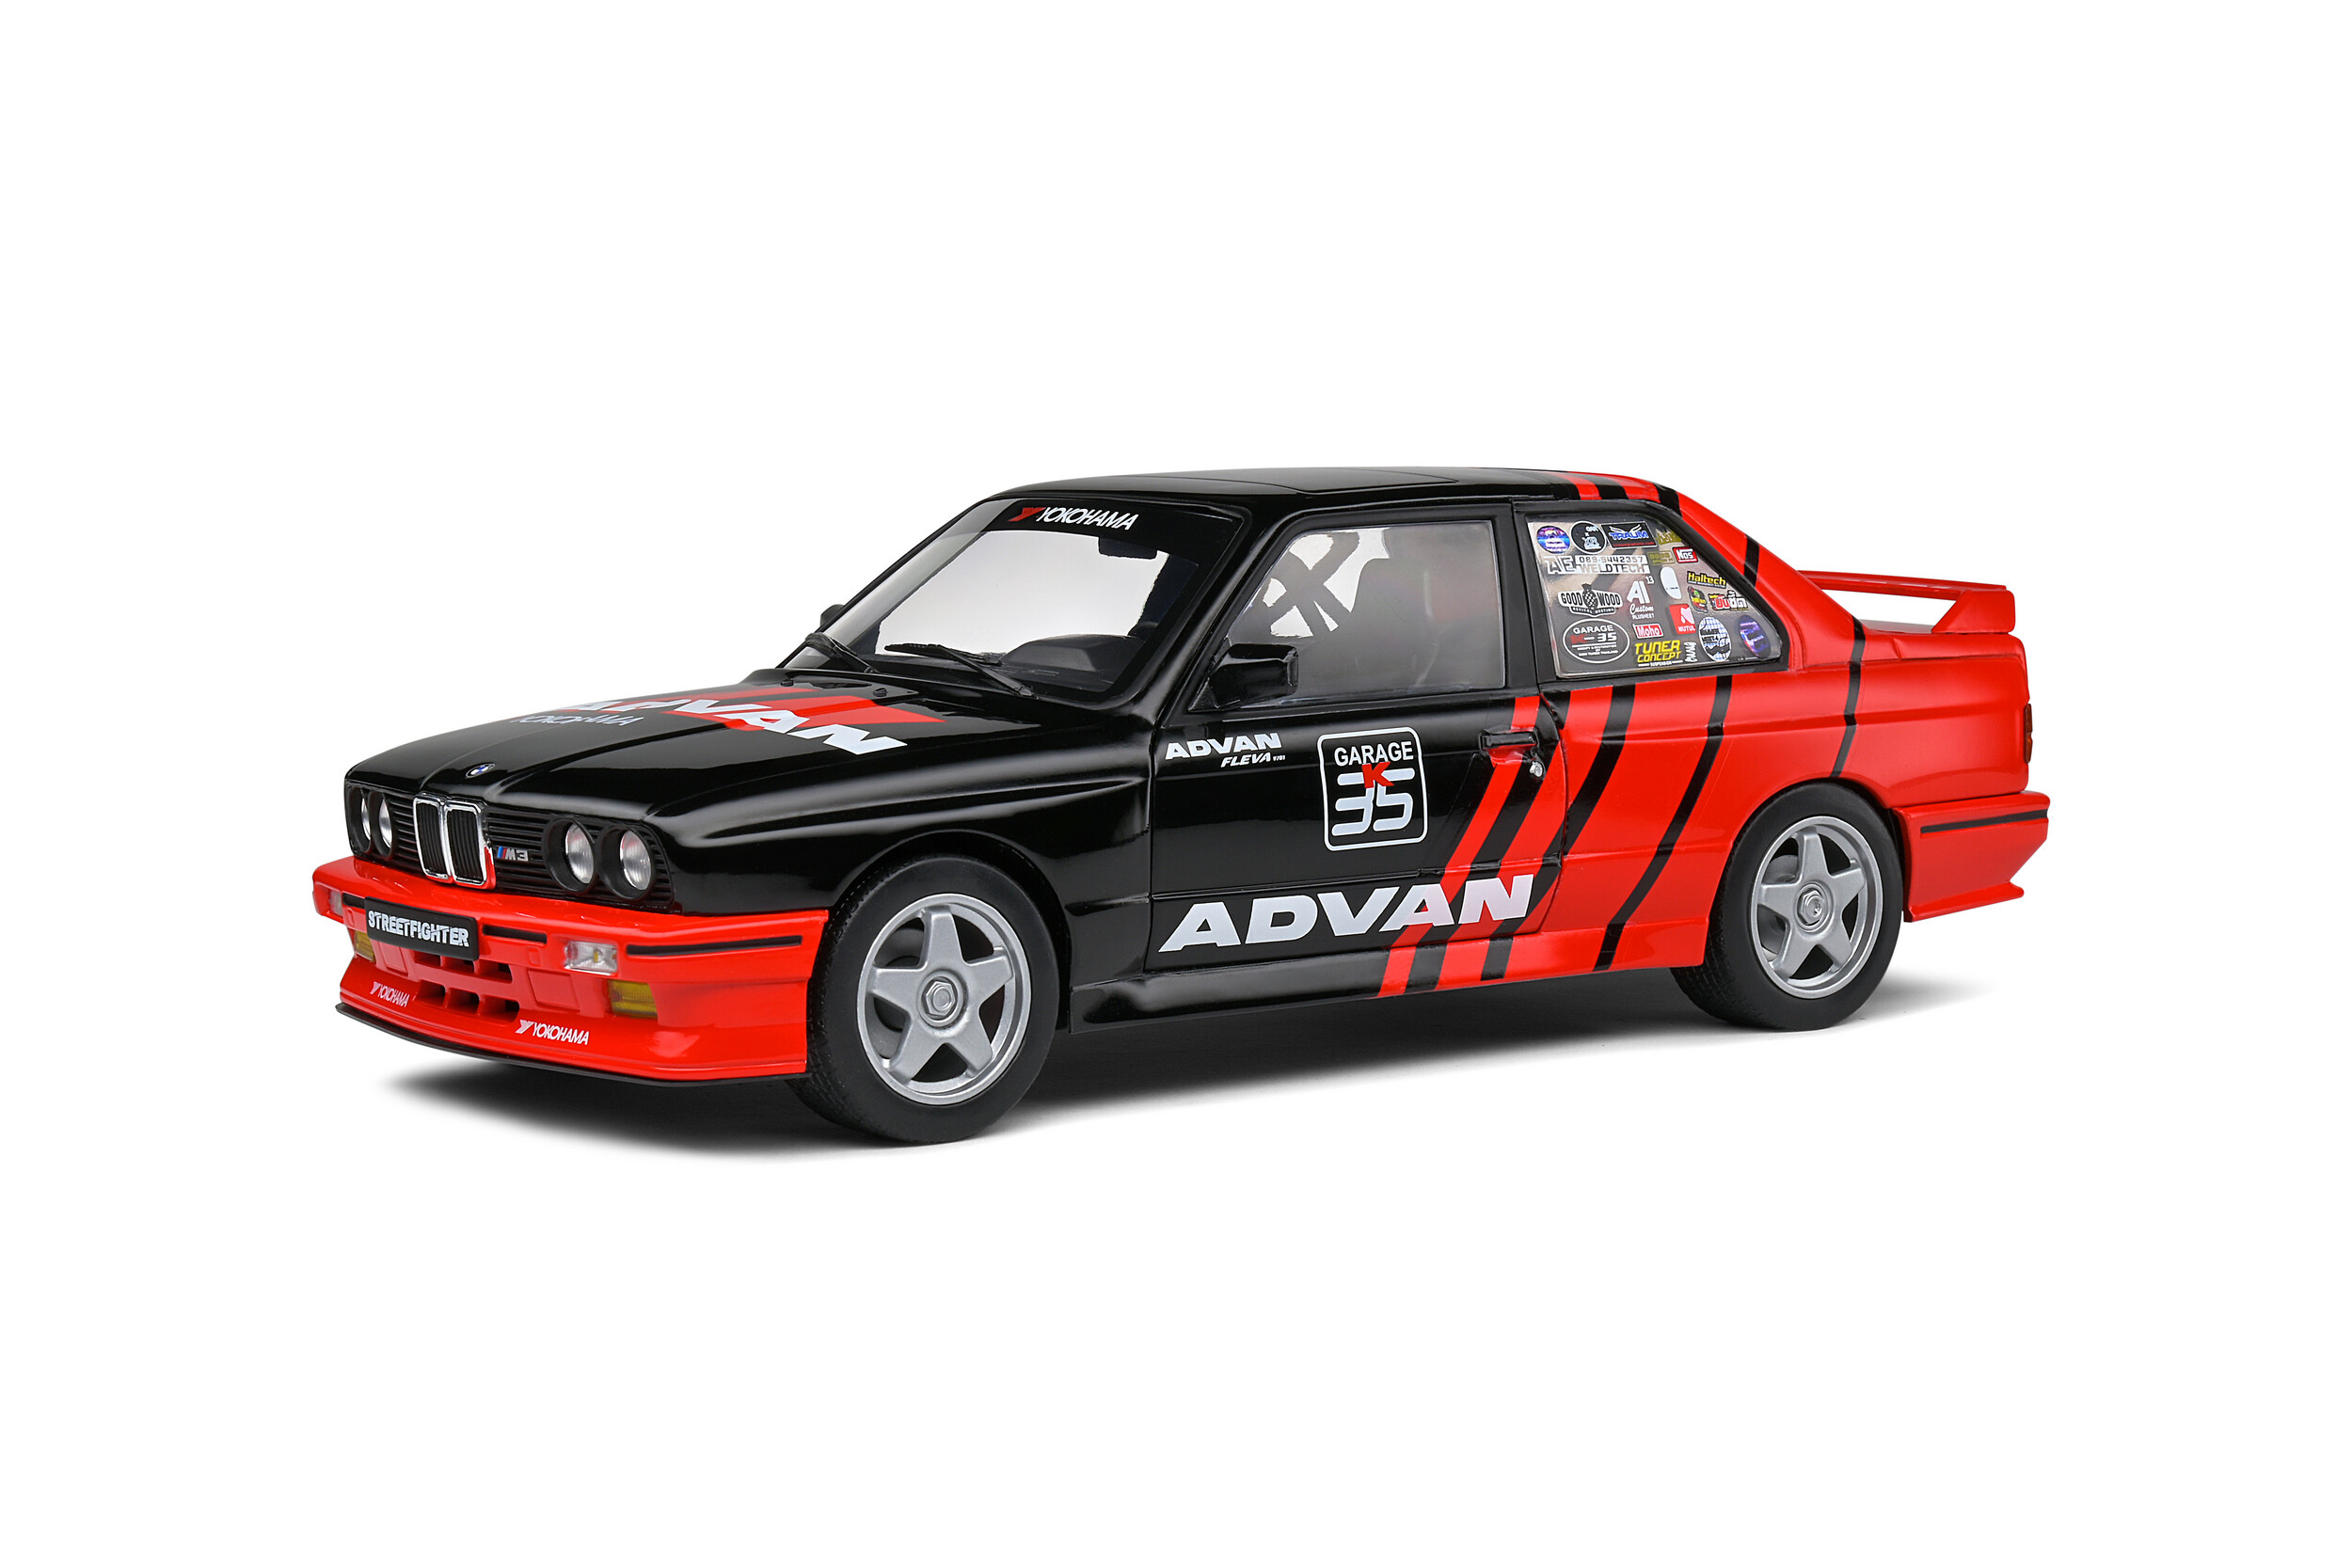 Product Image - Solido S1801521 BMW E30 M3 Advan Drift Team 1990 - Scale 1:18